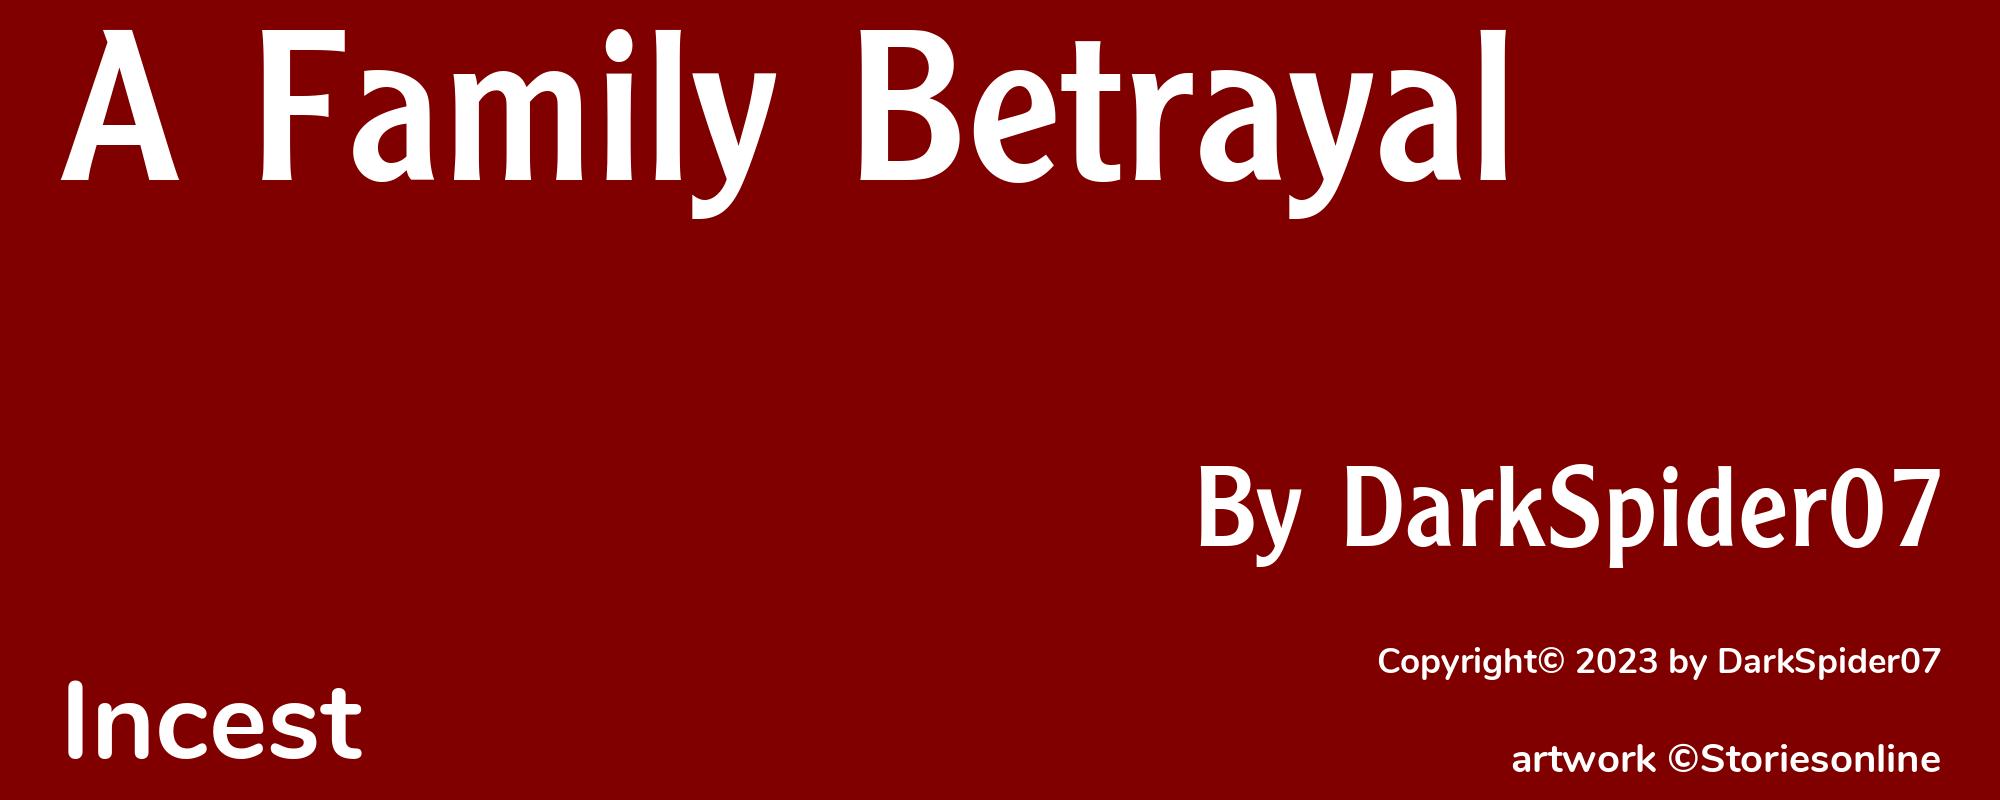 A Family Betrayal - Cover